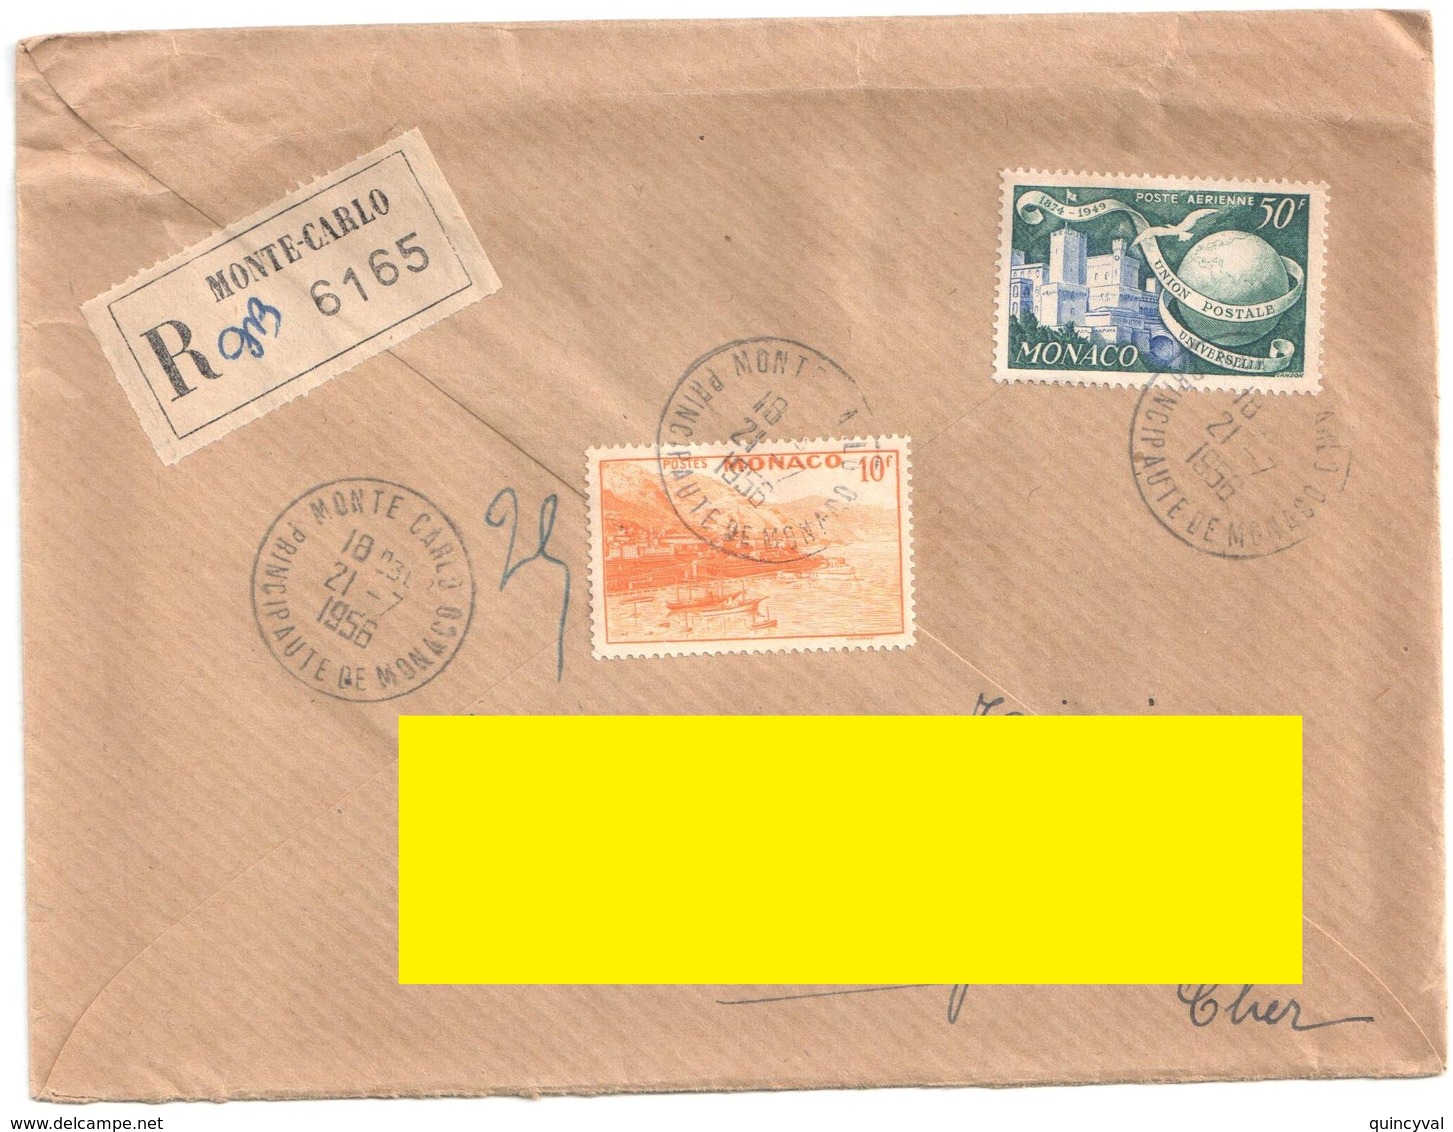 MONTE CARLO Lettre Recommandée Ob 21 7 1956 10 F Rade Jaune 50 FUPU Yv 311A PA47 - Lettres & Documents